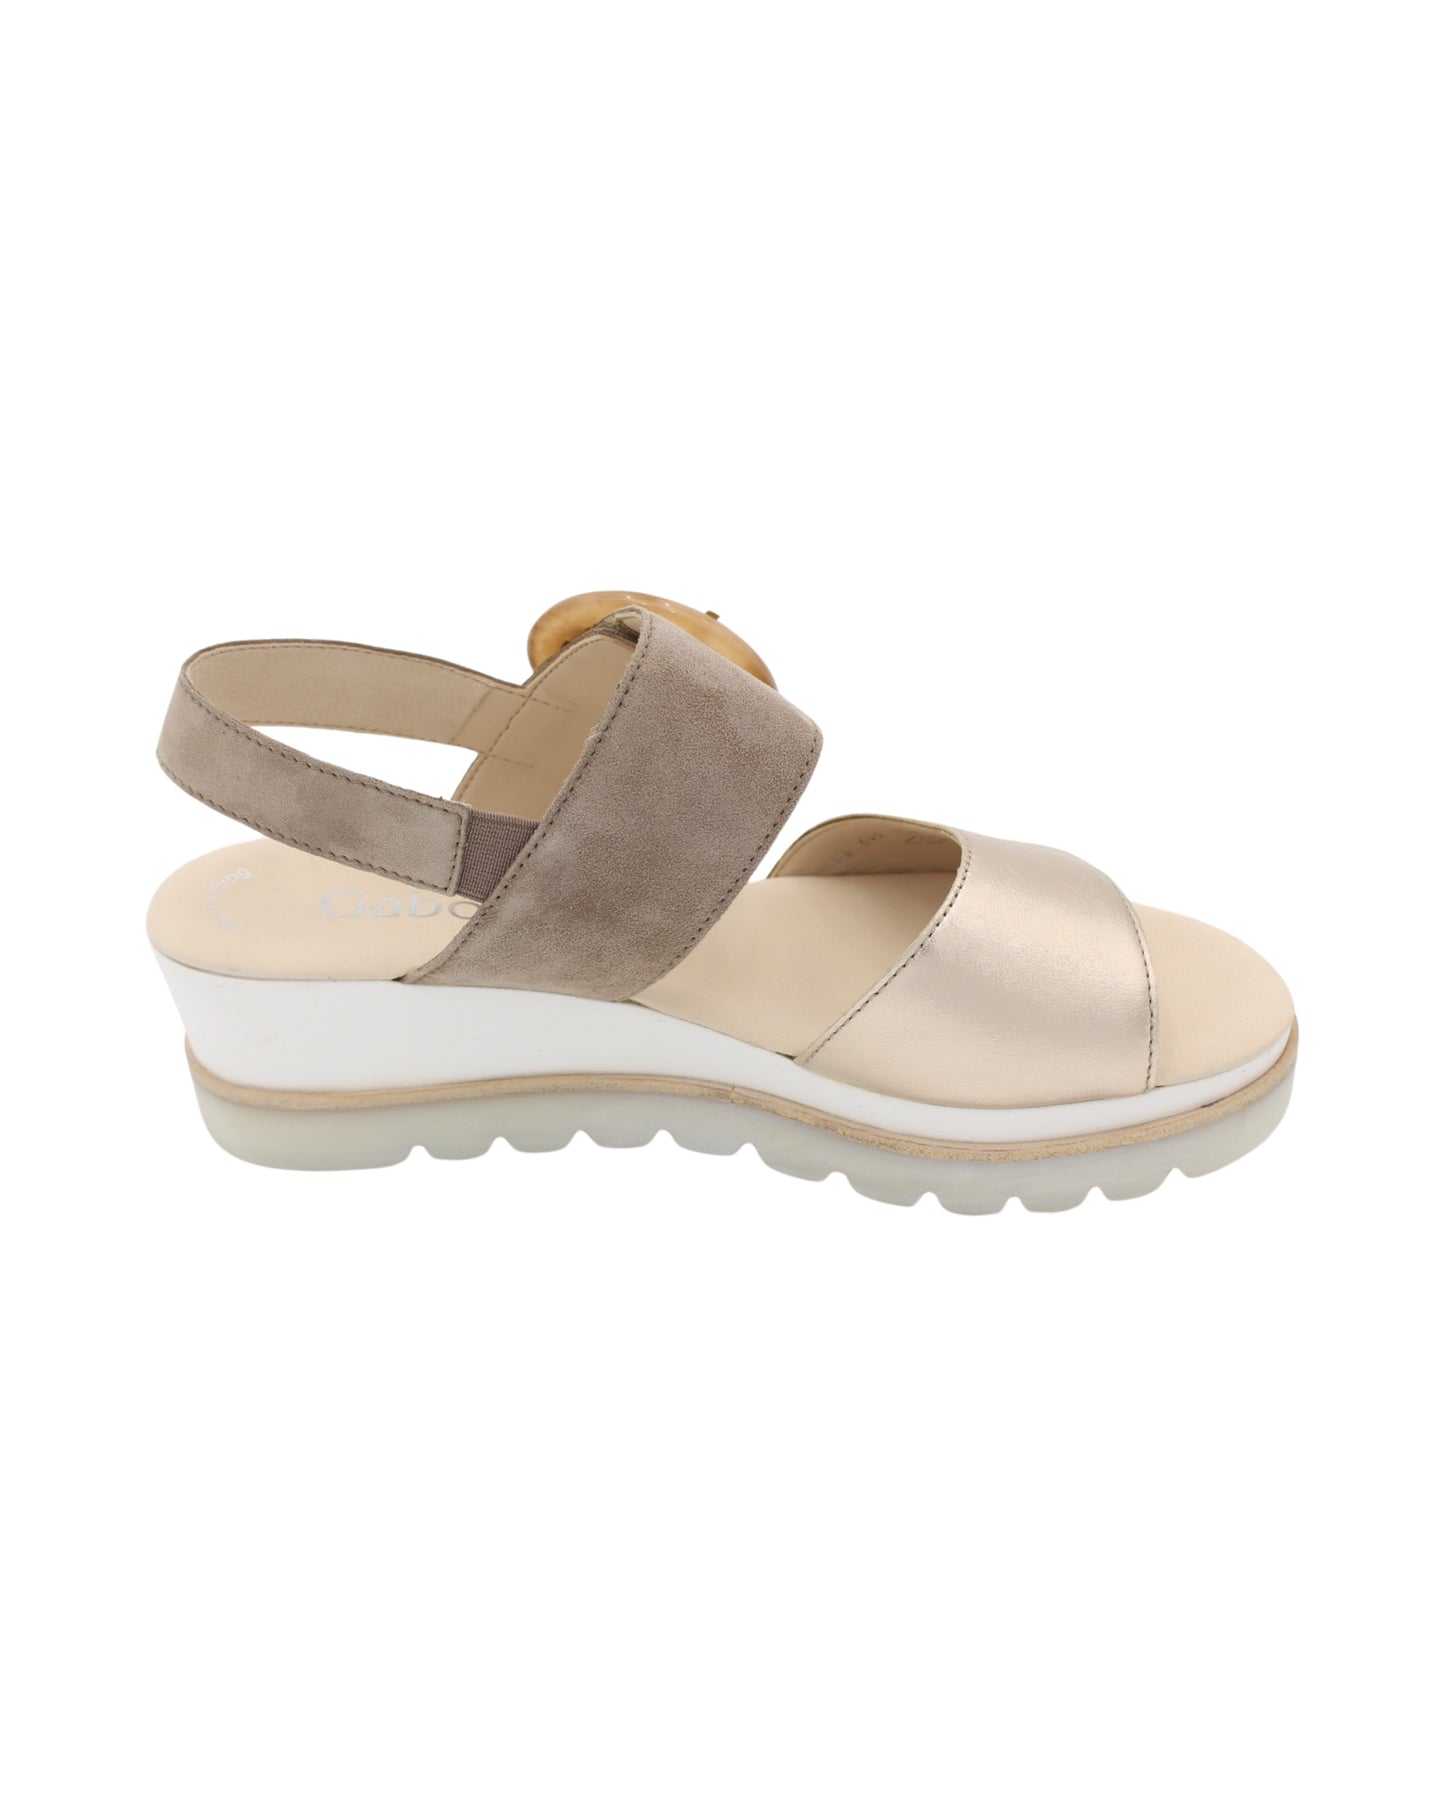 Gabor - Ladies Shoes Sandals Pewter (2202)